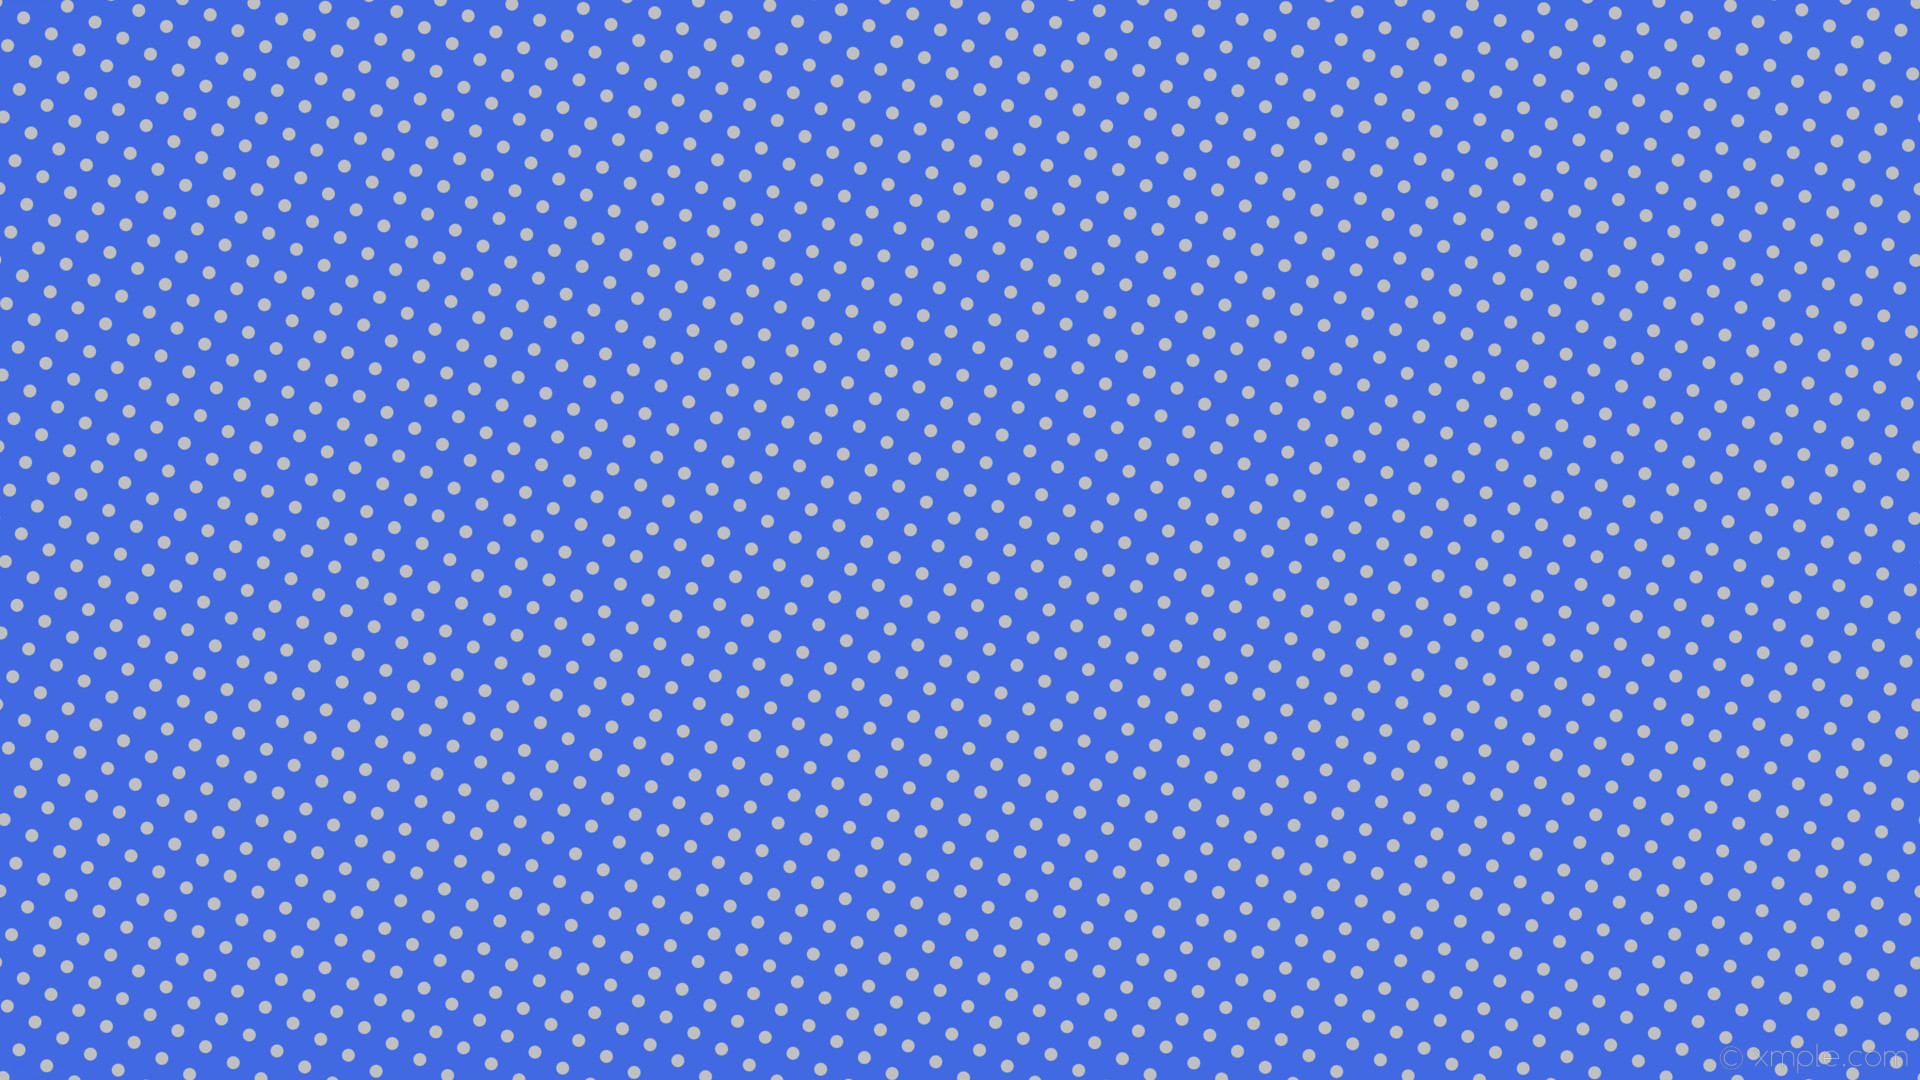 1920x1080 wallpaper blue polka dots grey spots royal blue silver #4169e1 #c0c0c0 60Â°  13px